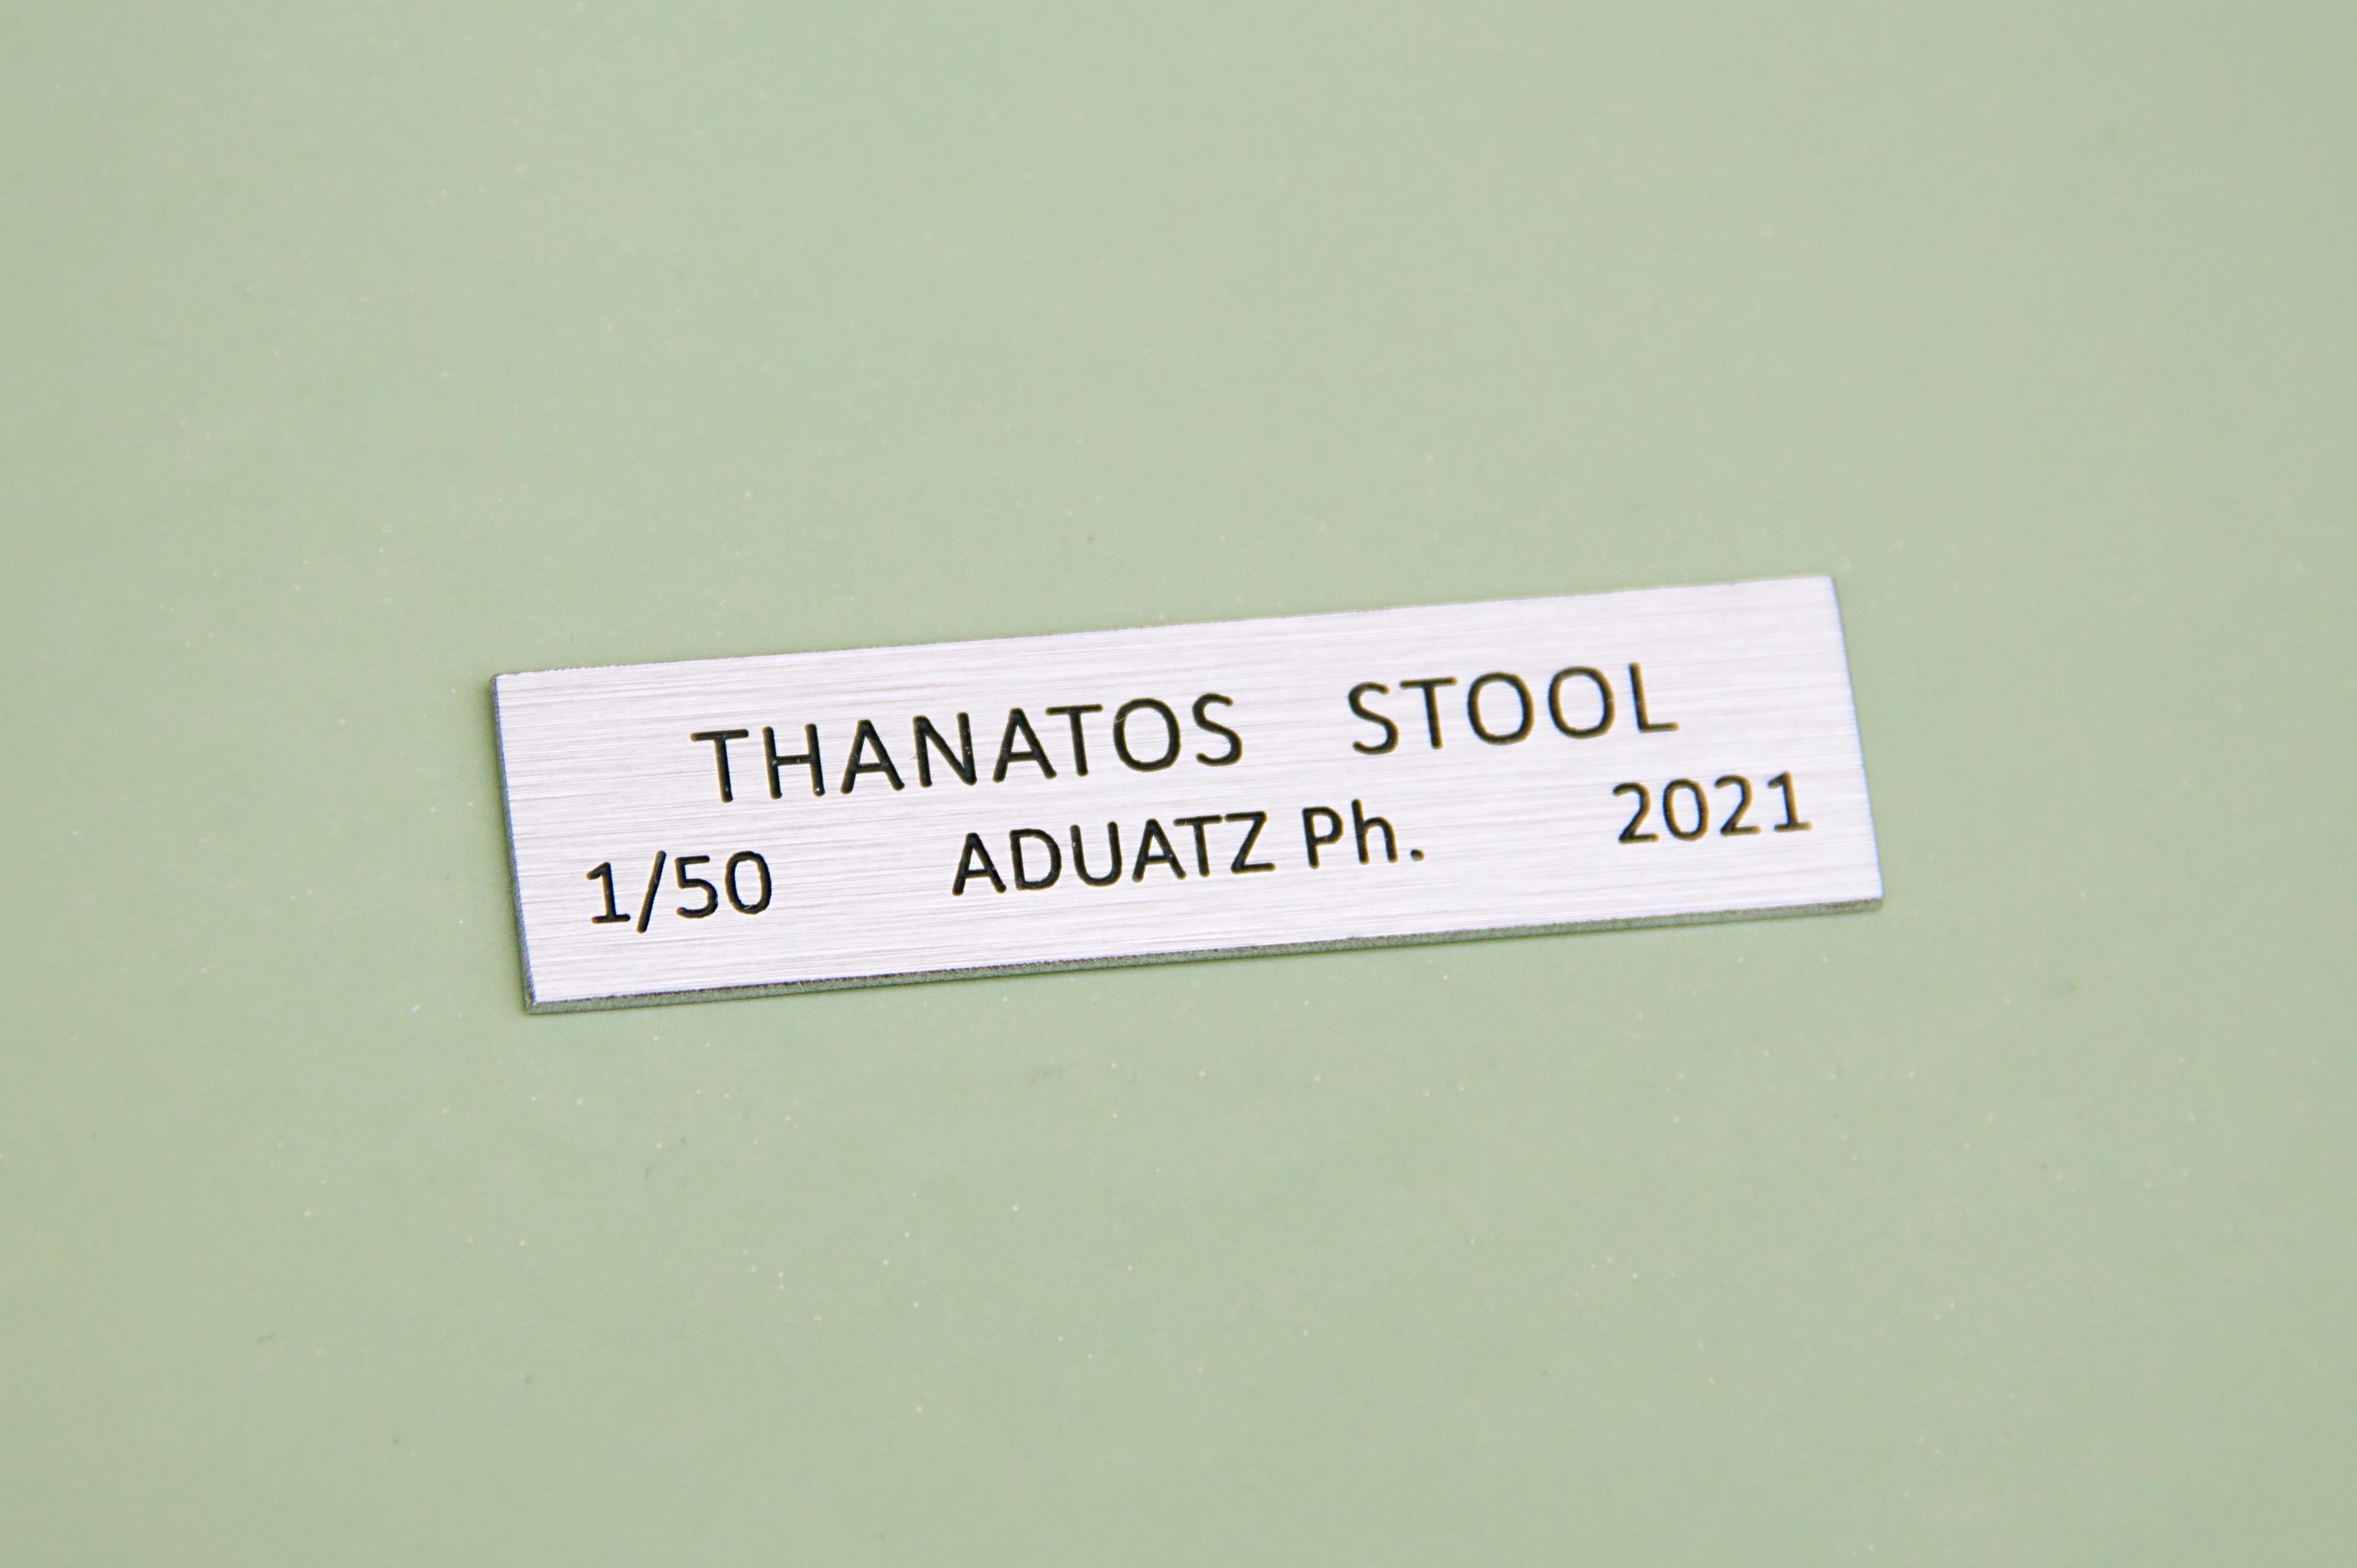 Resin Thanatos Stool by Philipp Aduatz